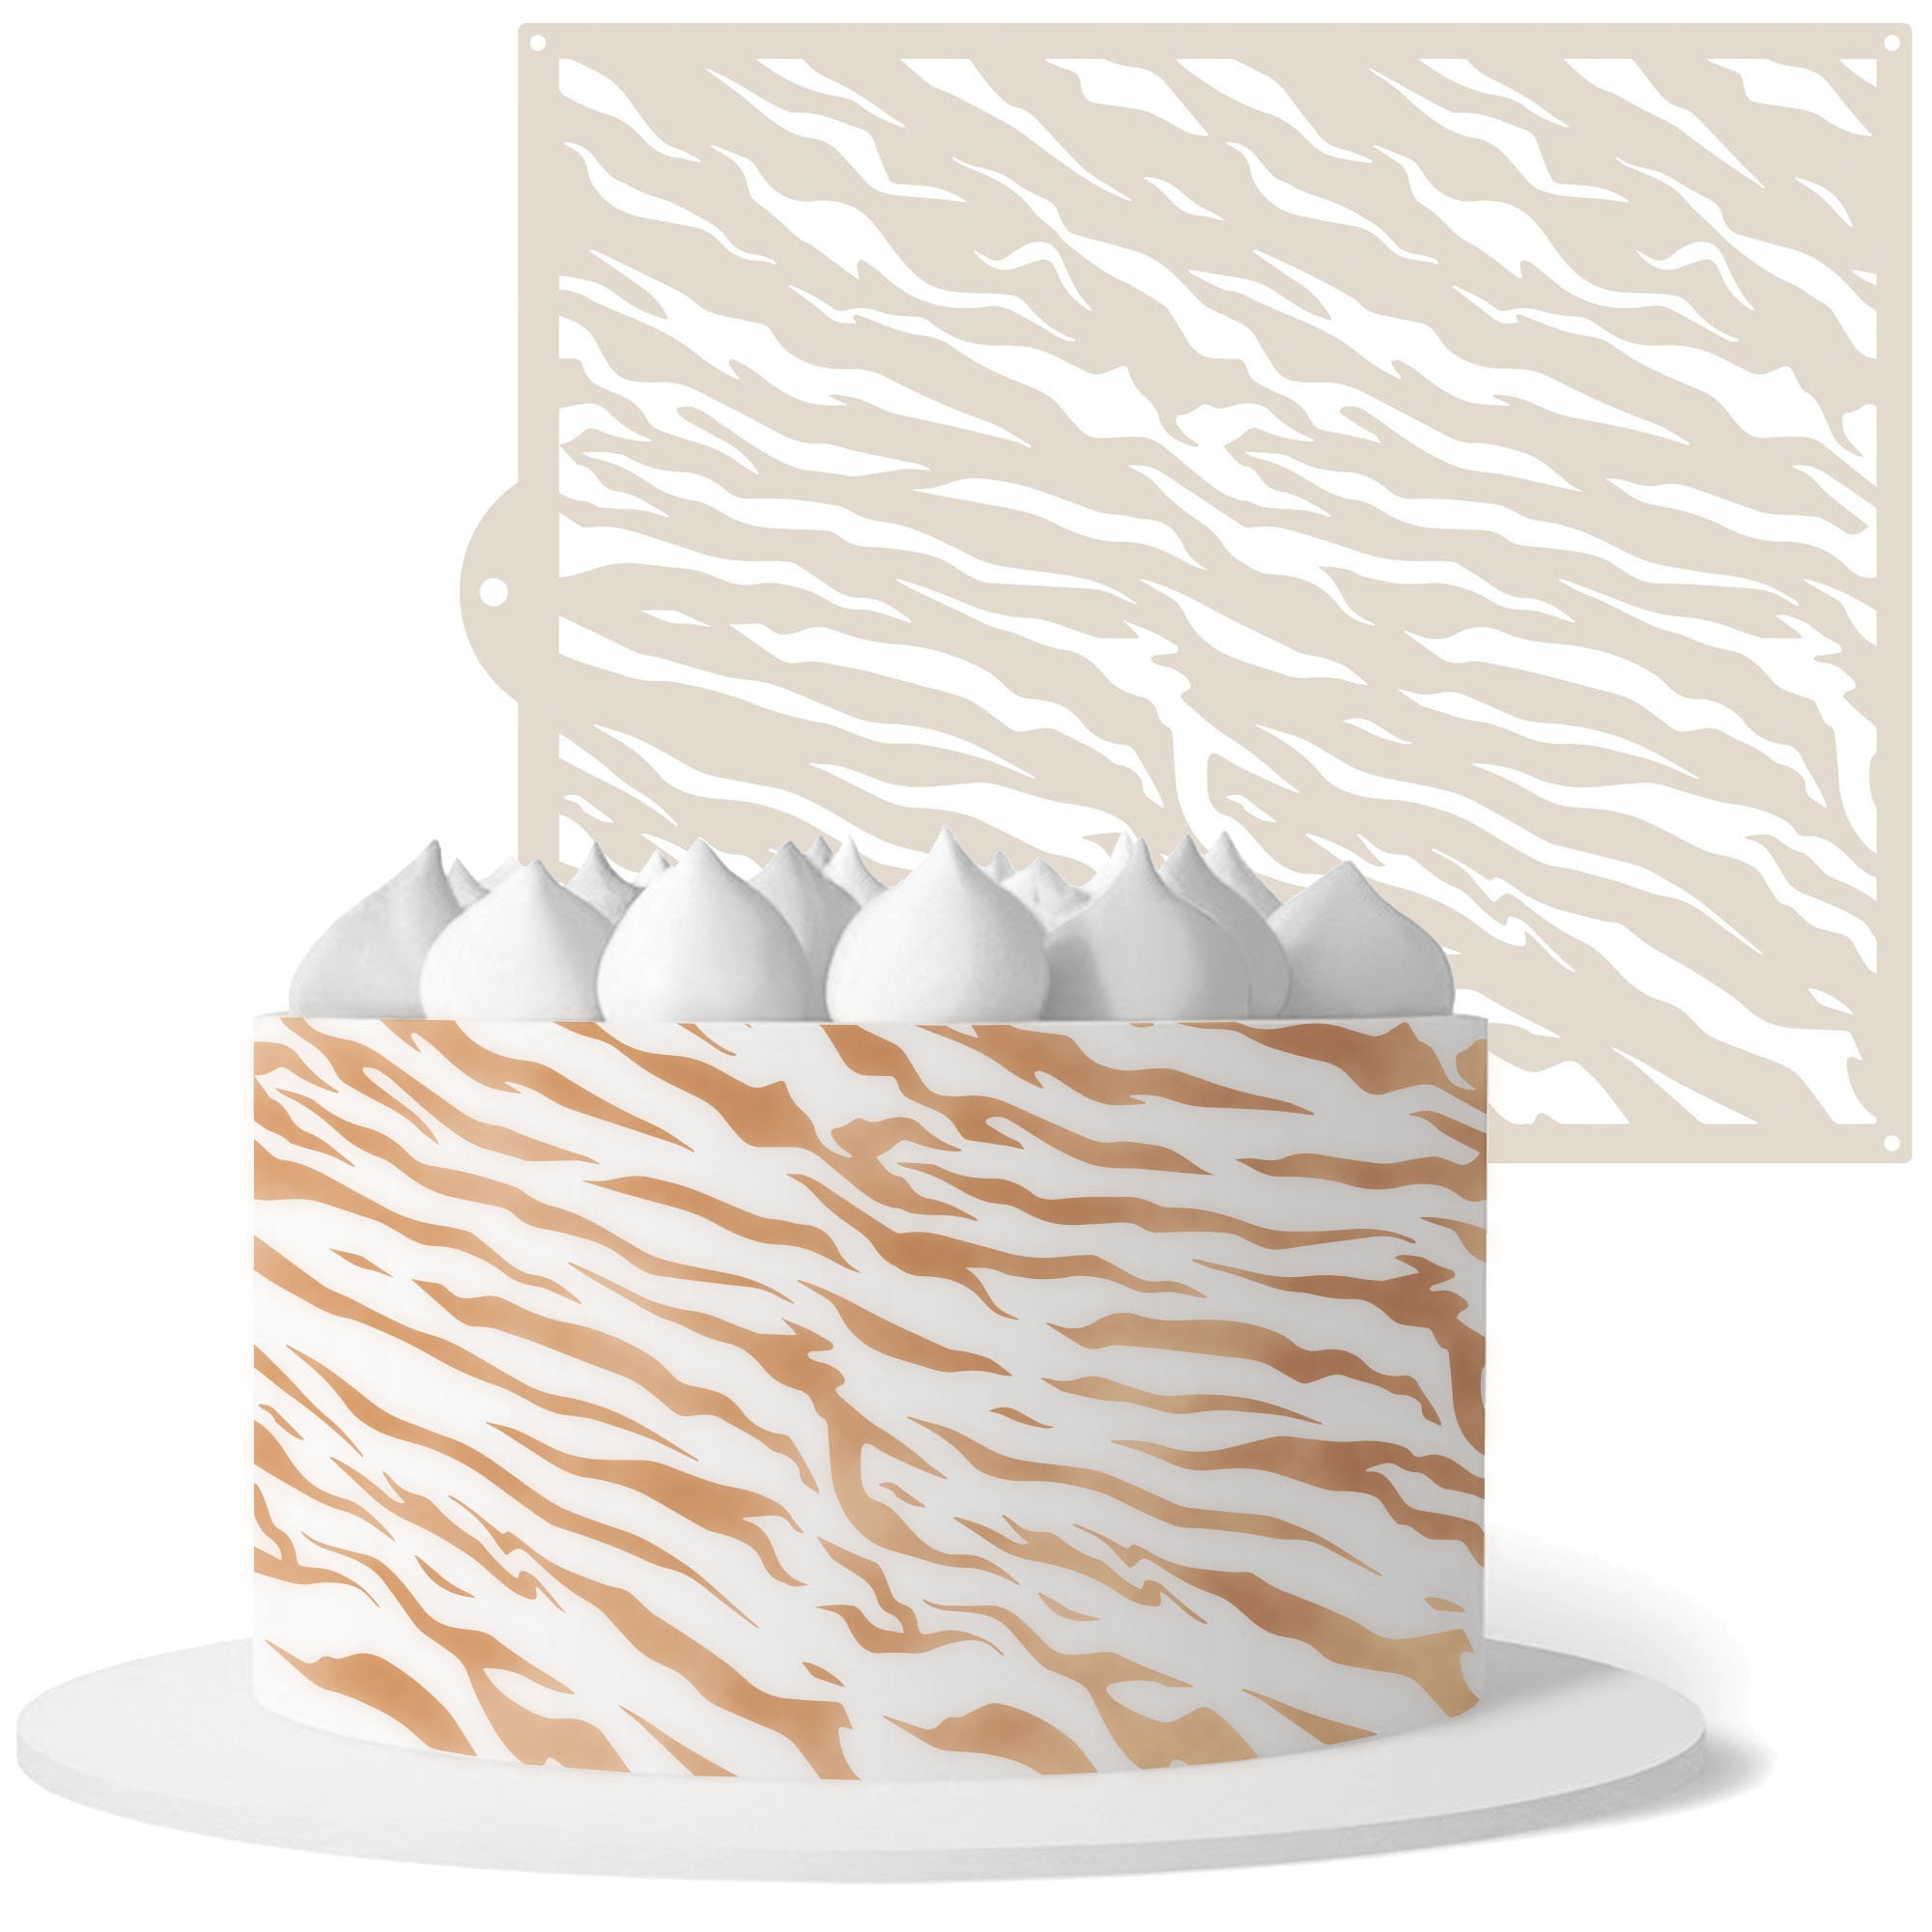 Hobbycor Manual Airbrush Cake  Airbrush Kit Cake Decorating